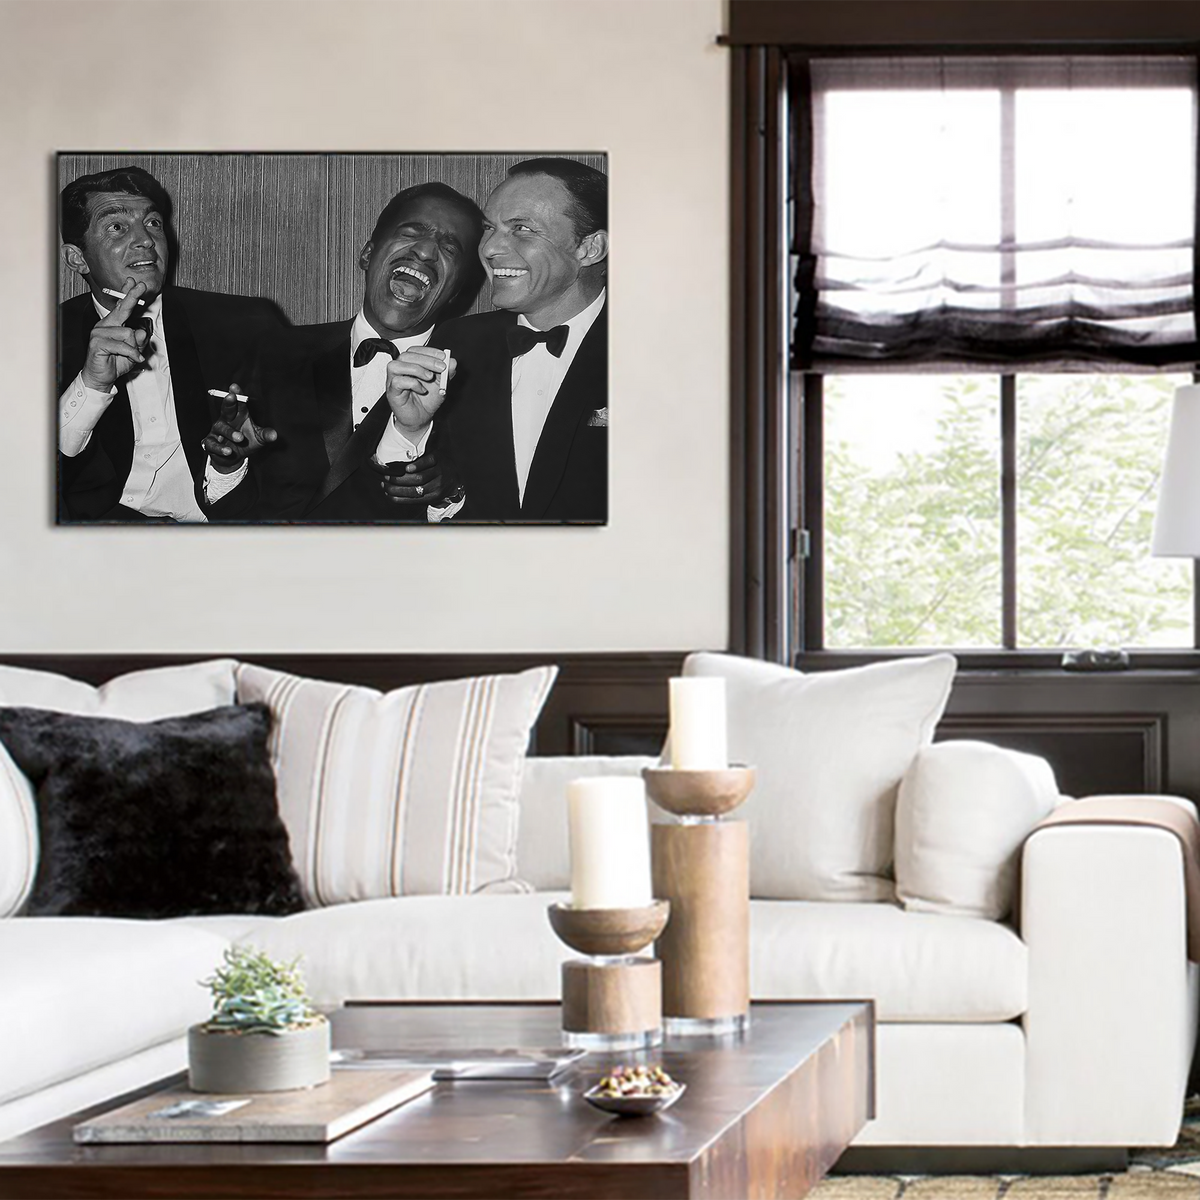 Dean Martin, Sammy Davis Jr. And Frank Sinatra Laughing